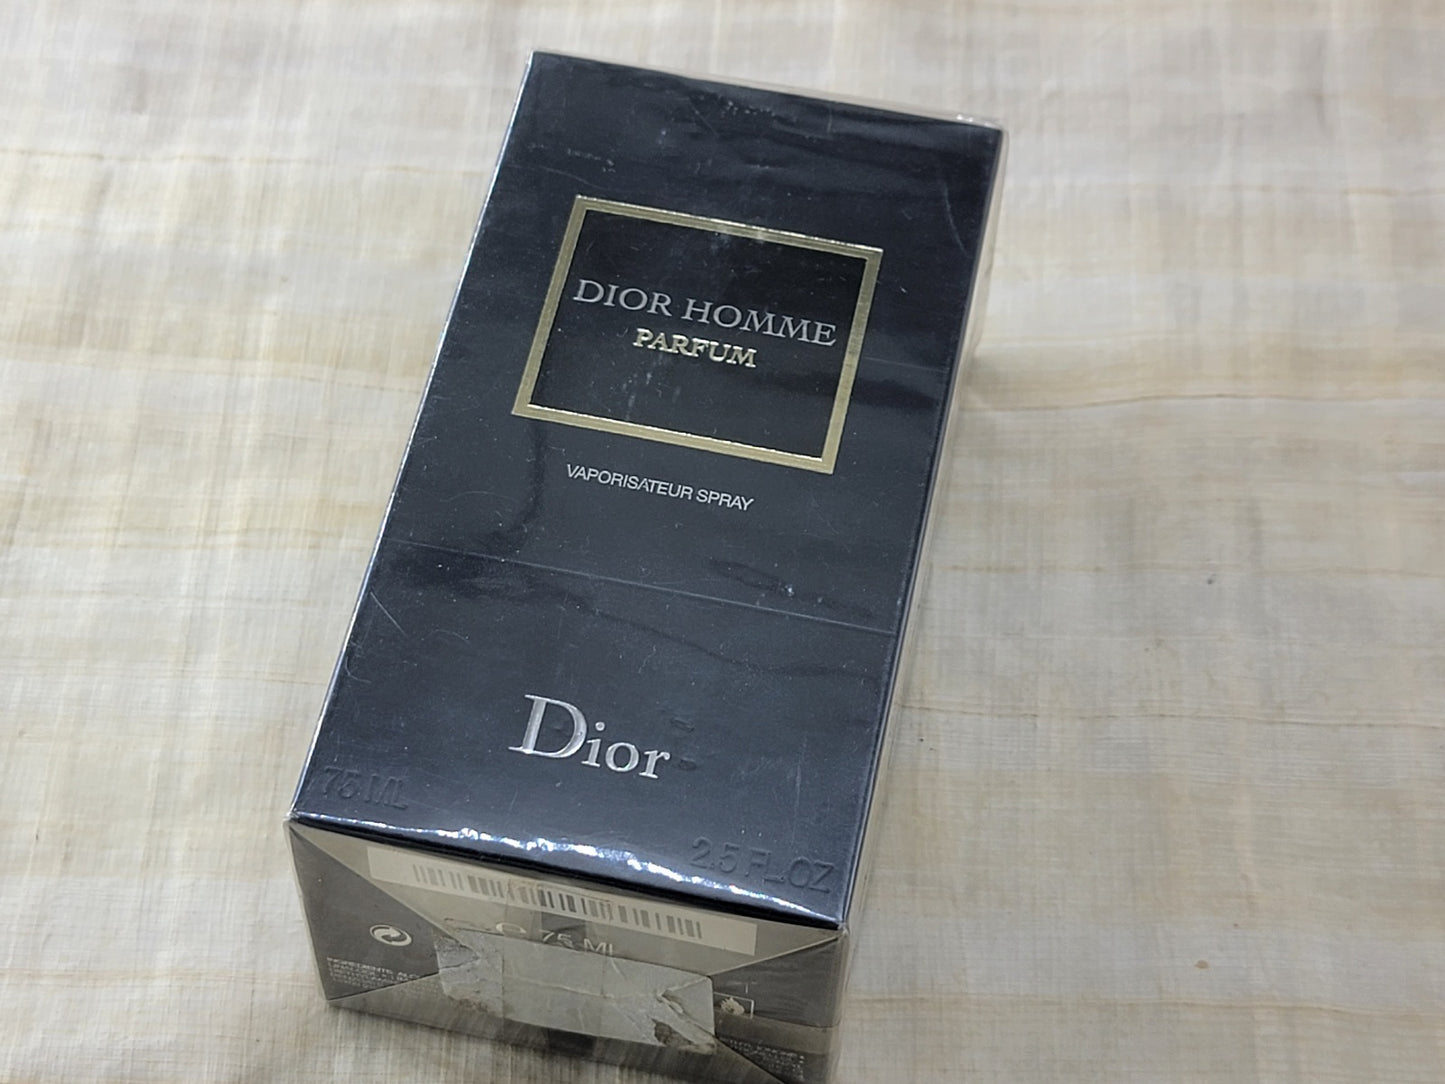 Dior Homme Parfum First Edition 2014 Christian Dior for men Spray EDP 75 ml 2.5 oz, Vintage, Rare, Sealed